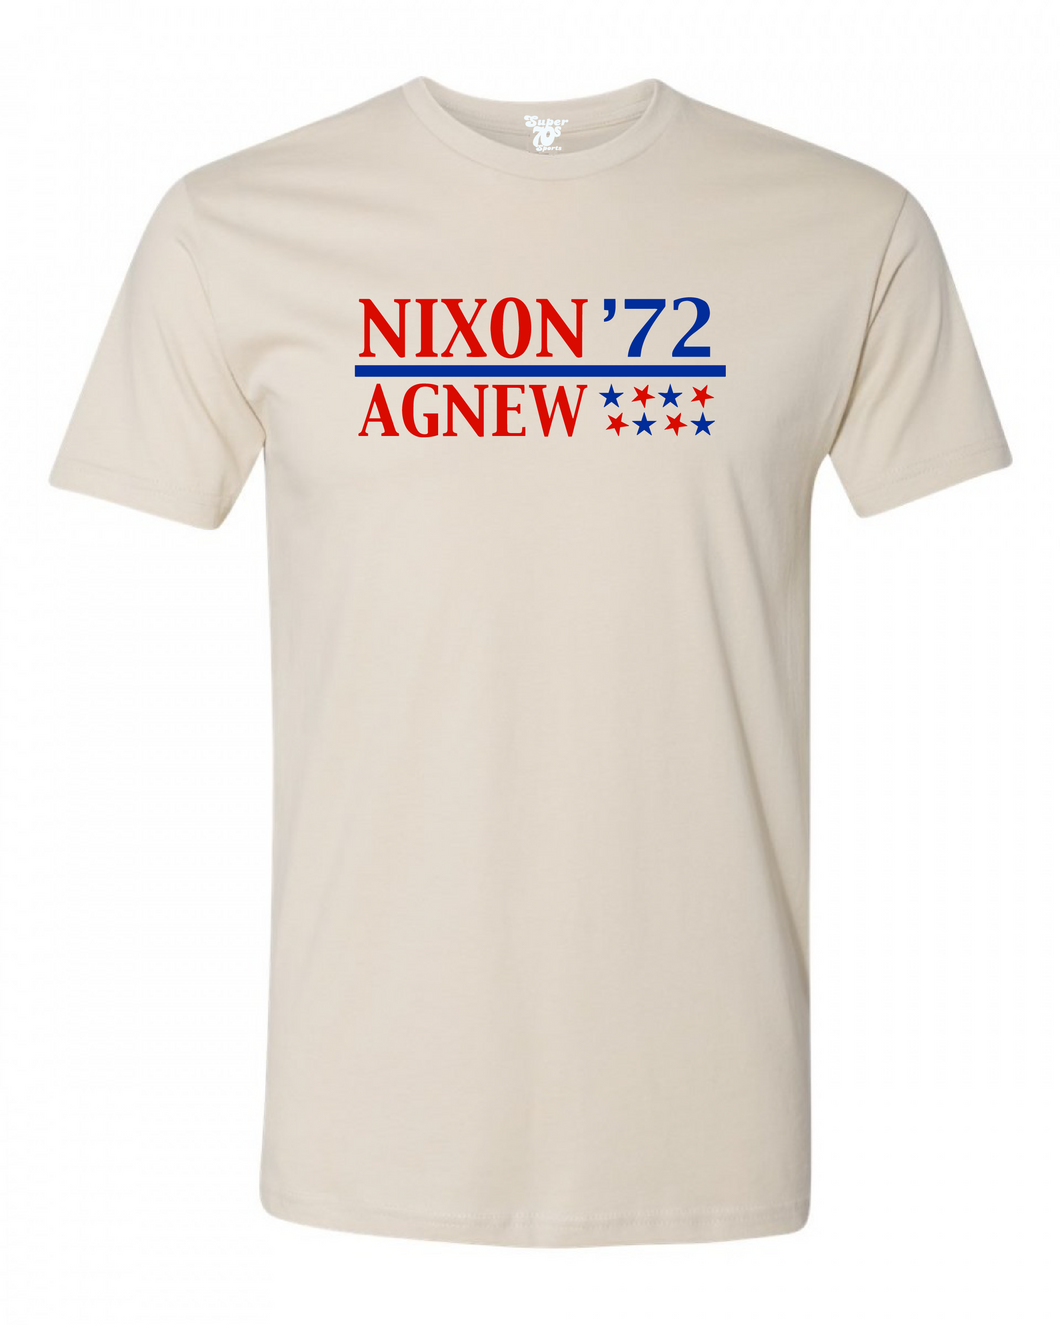 Nixon / Agnew '72 Tee